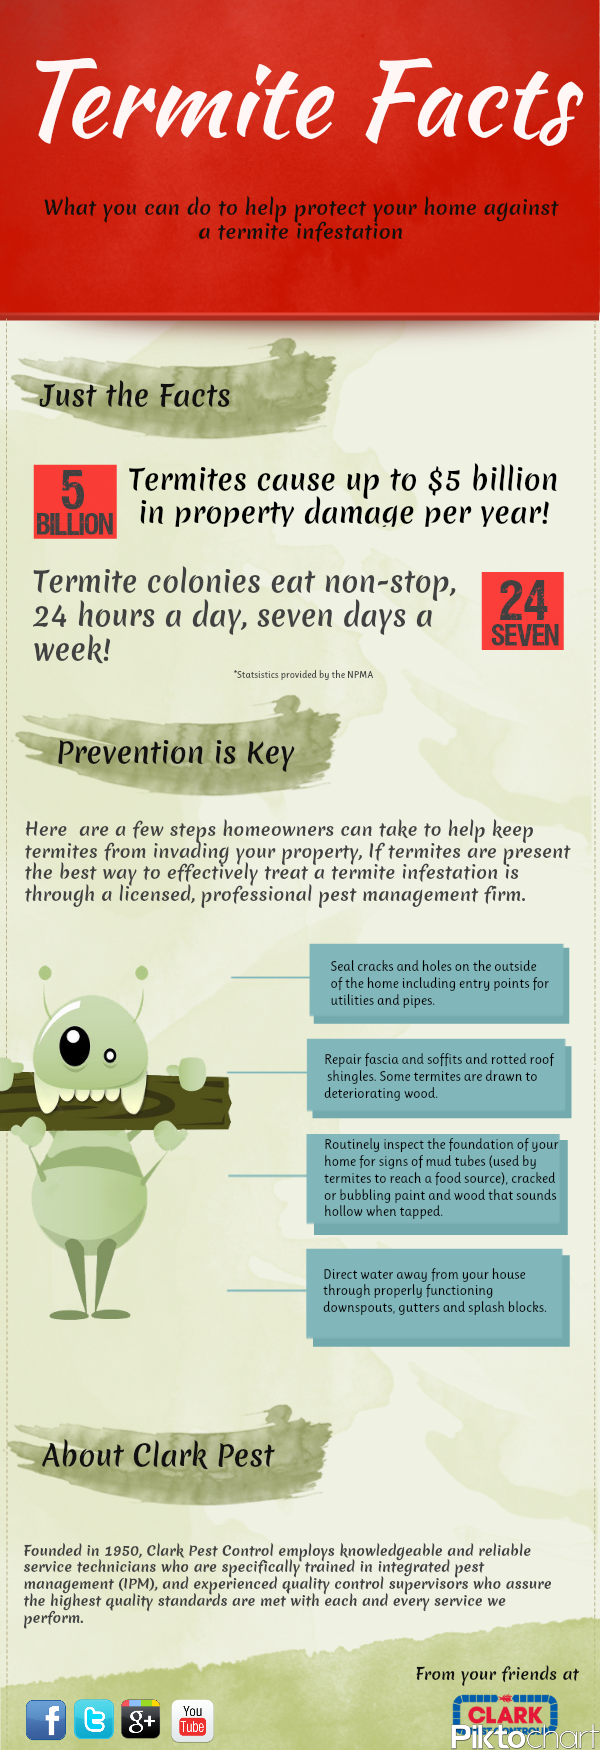 termite facts 2013